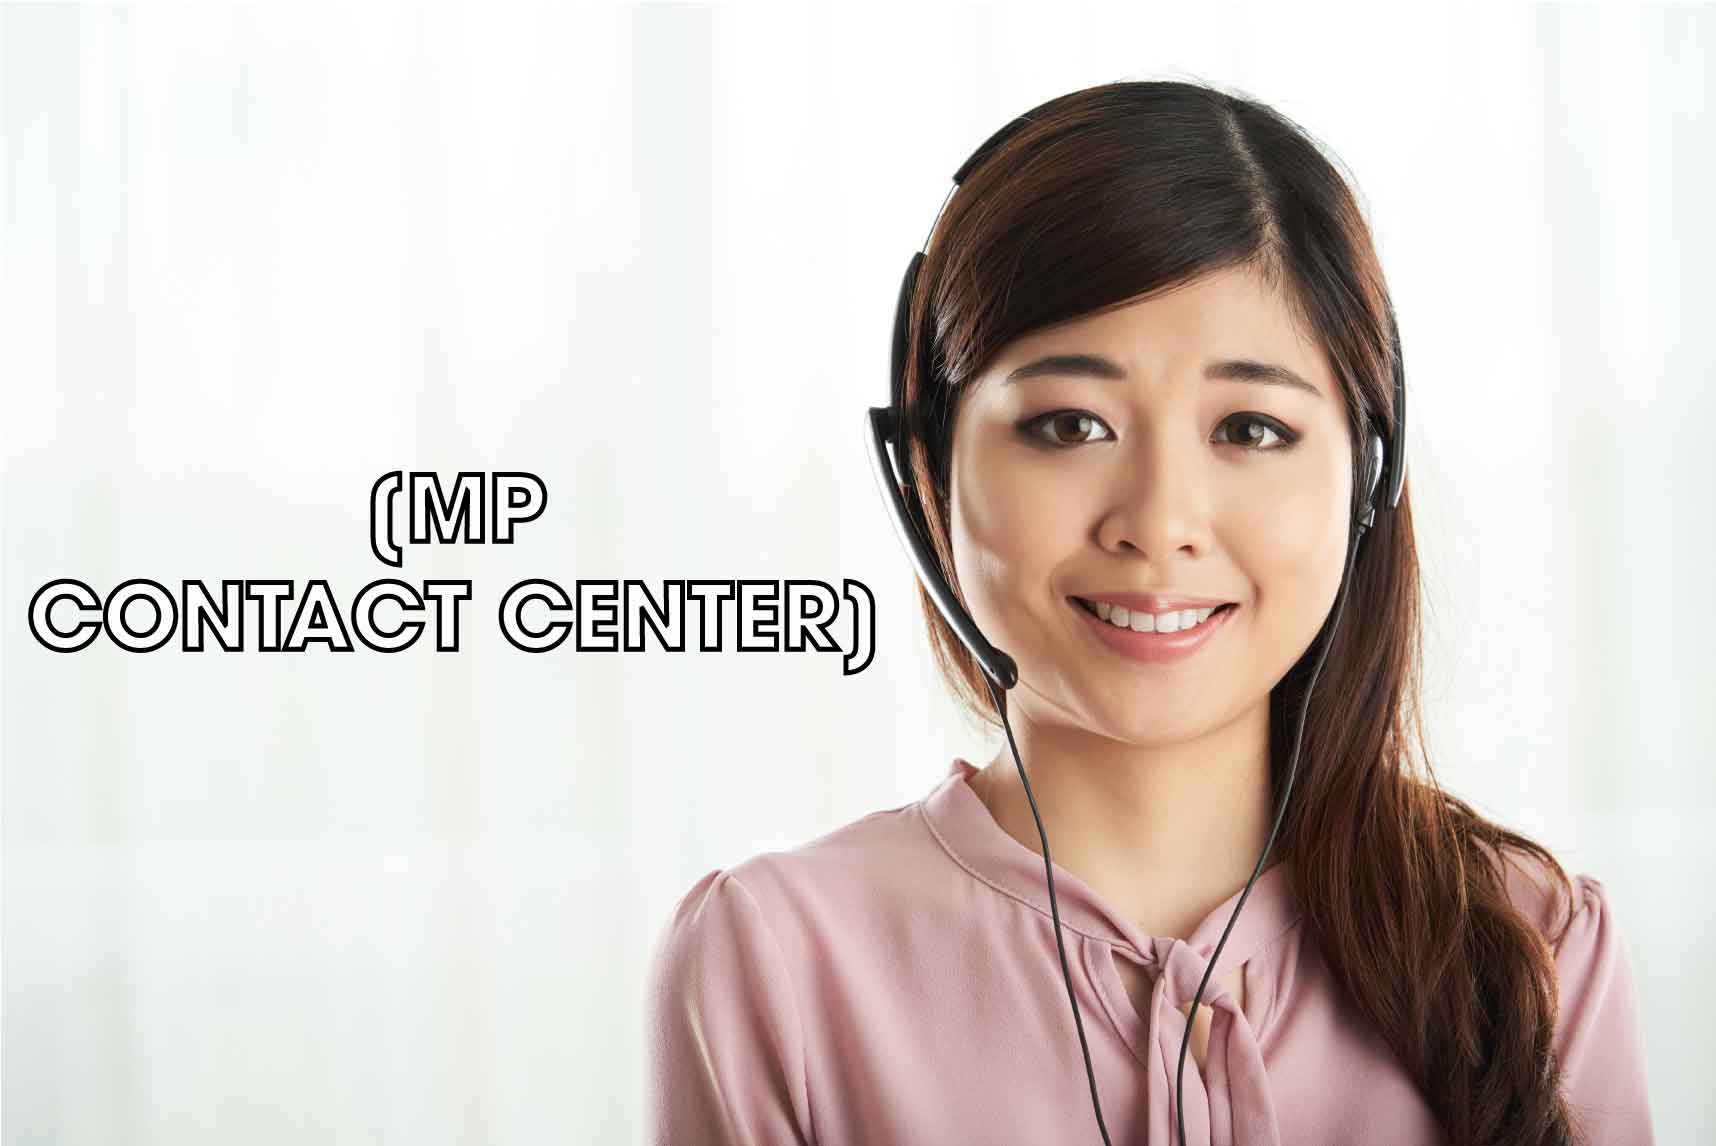 mp-contact-center-la-gi